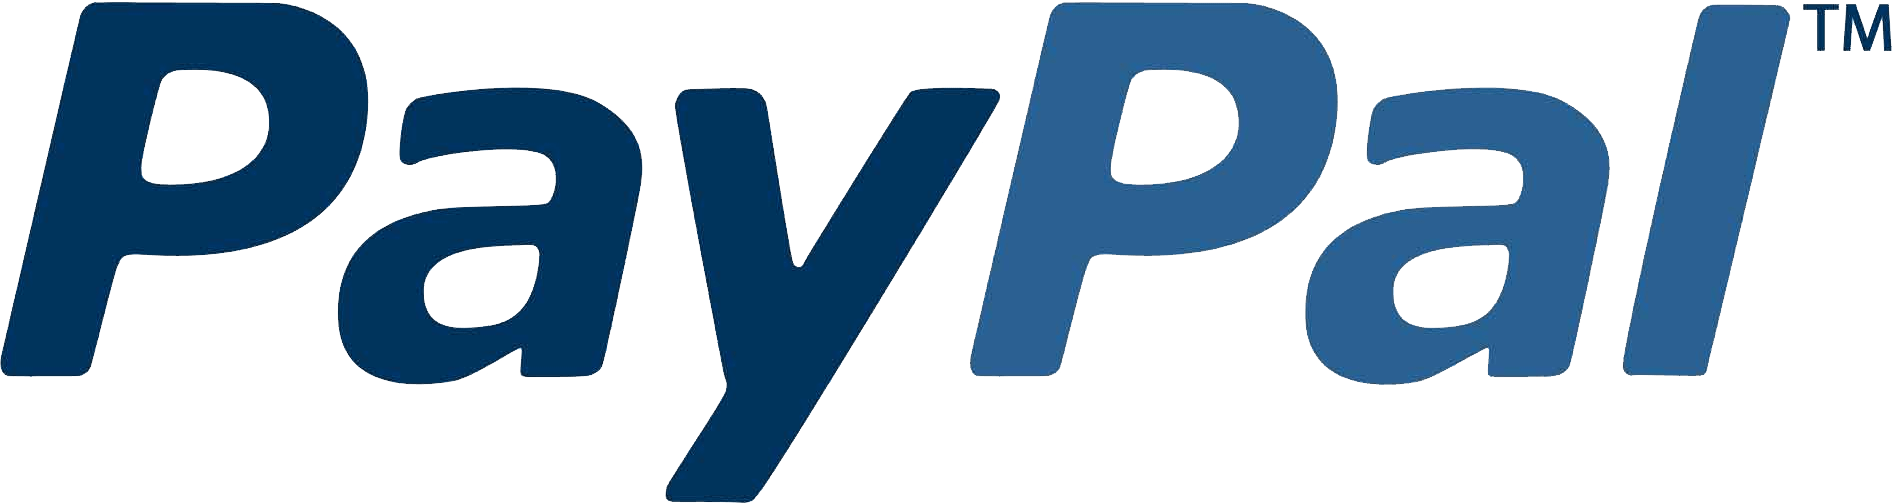 Paypal logo transparent background - molieuropean